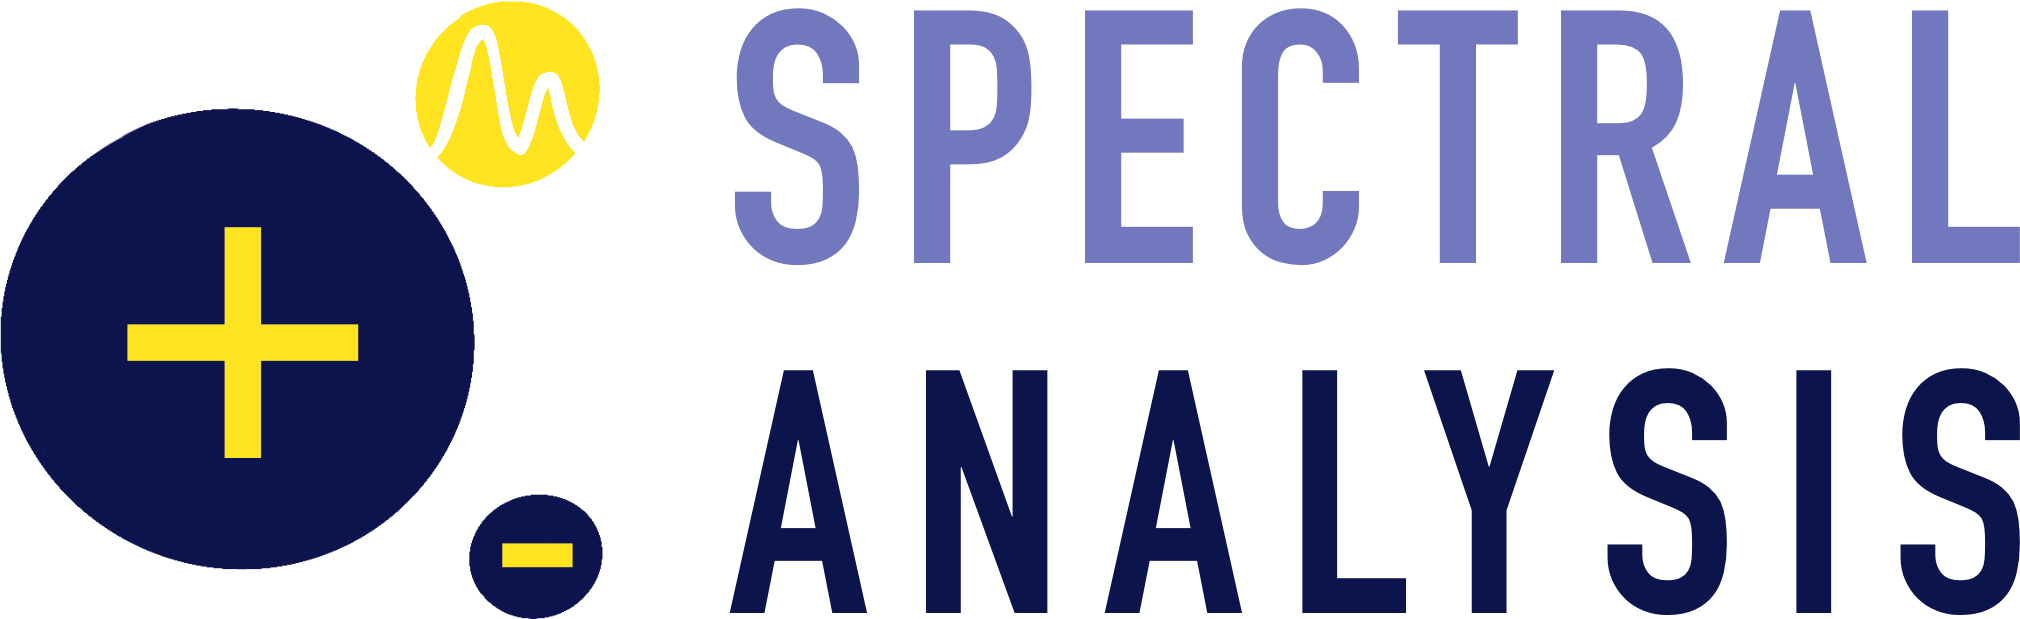 SpectralAnalysis logo